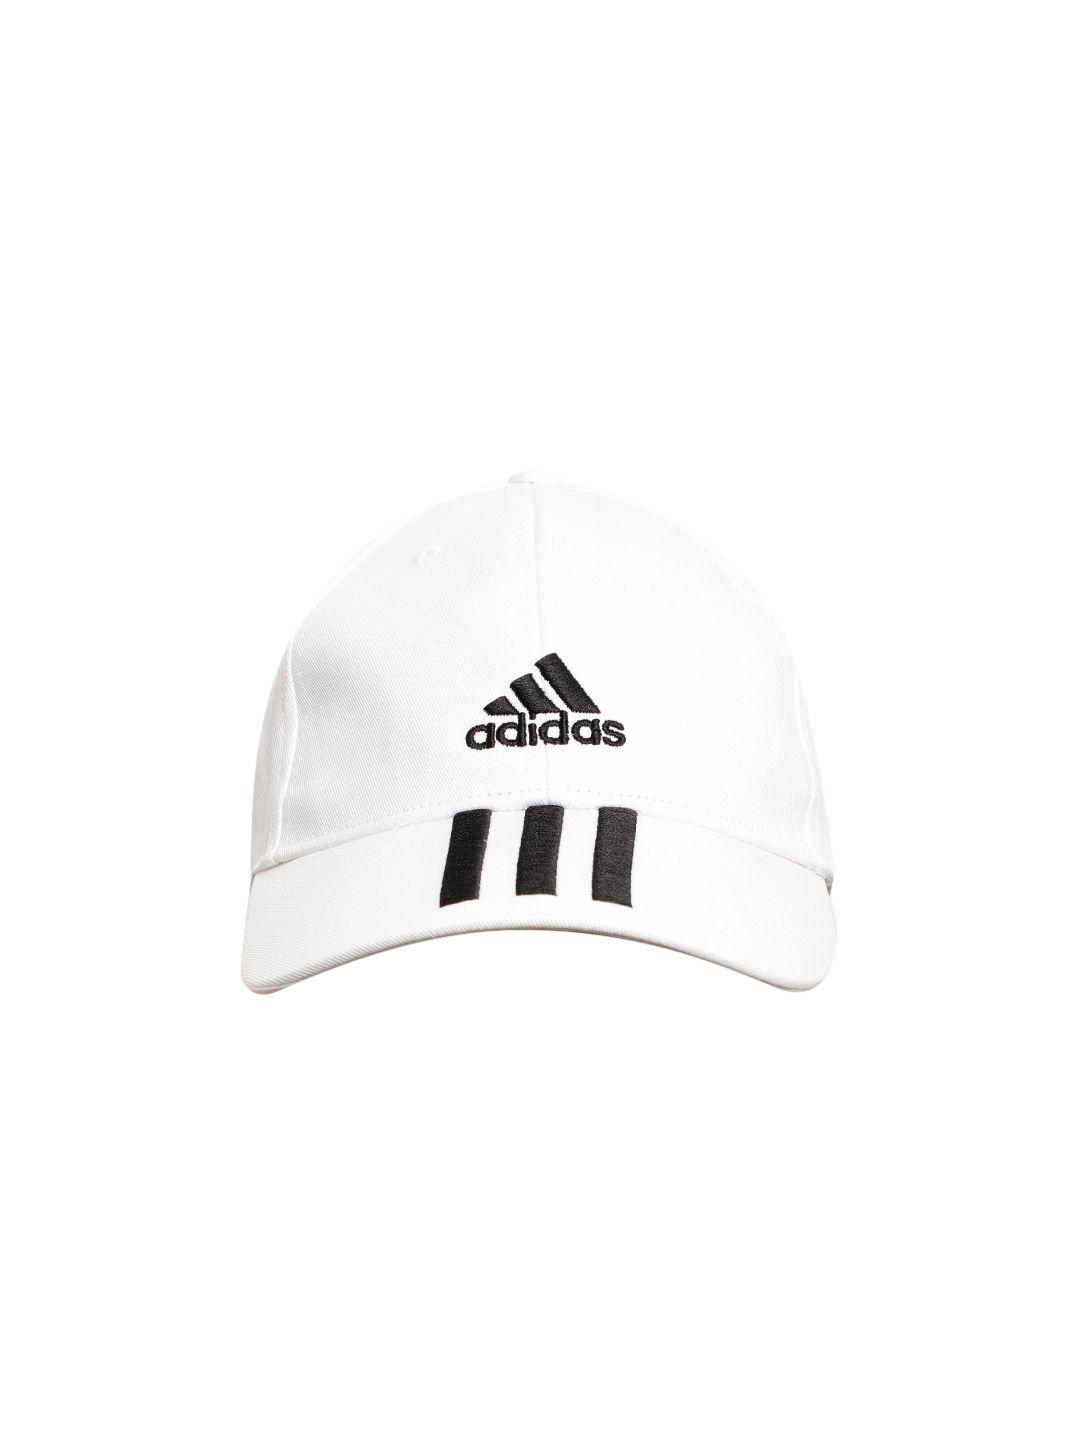 adidas-unisex-white-&-black-brand-logo-embroidered-visor-cap